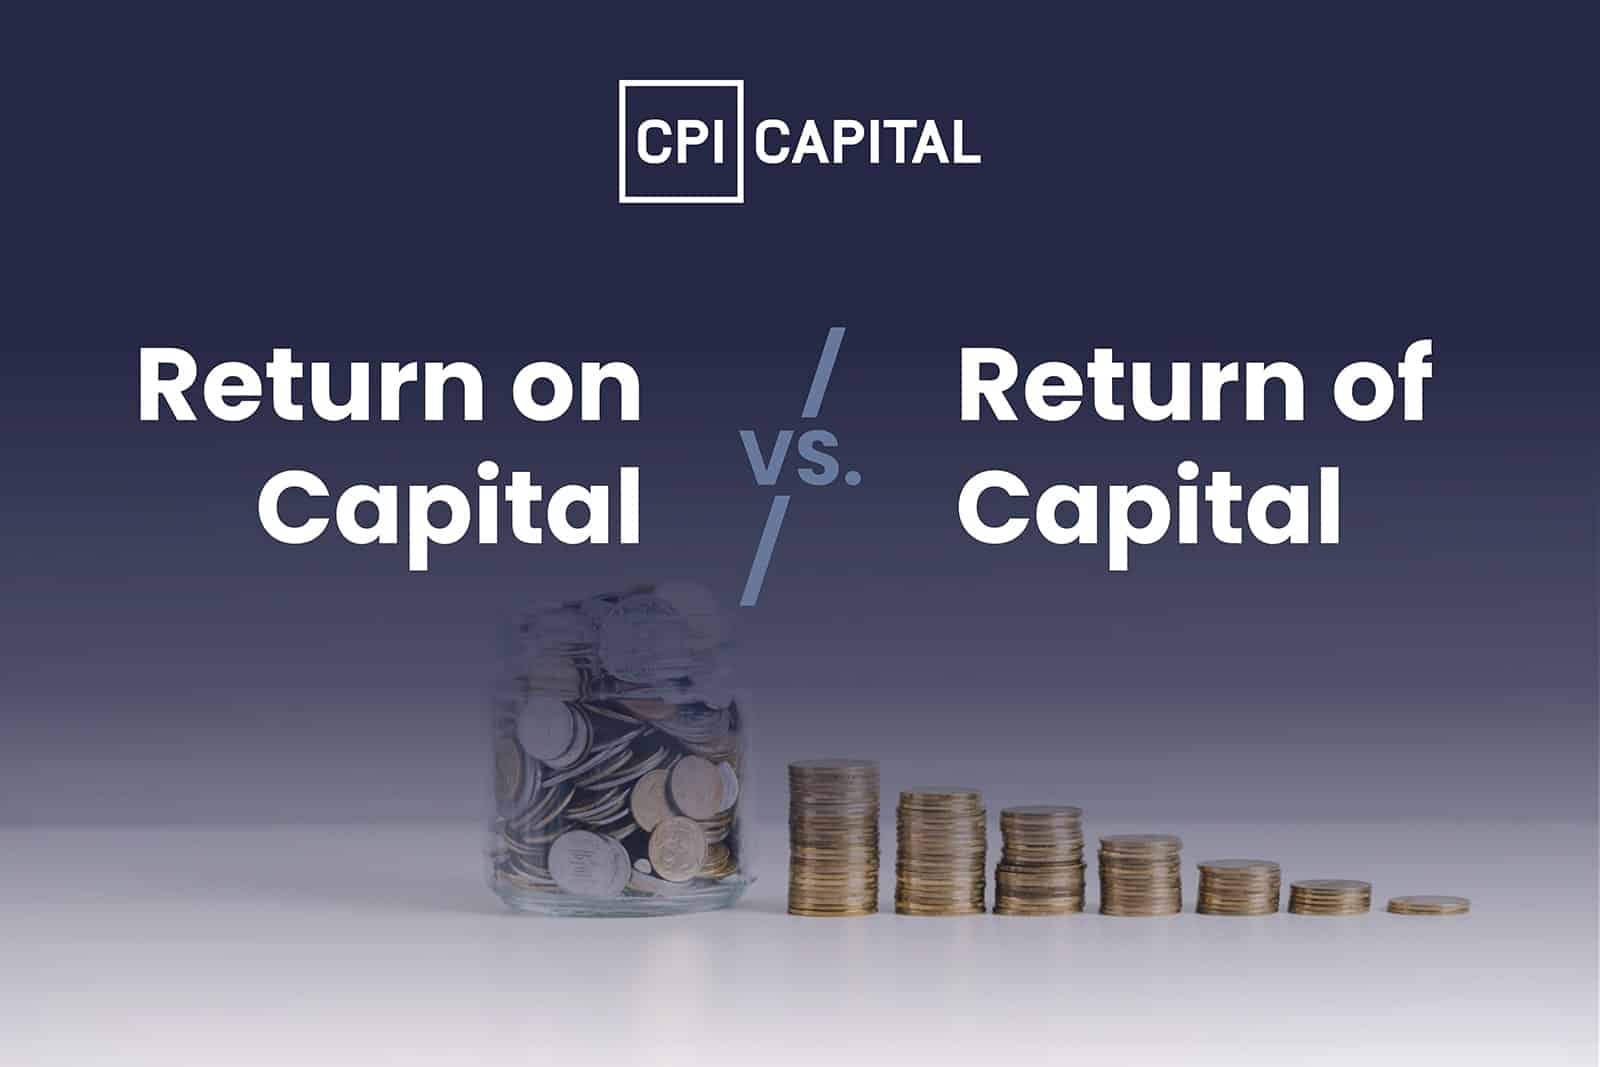 Return on Capital vs Return of Capital